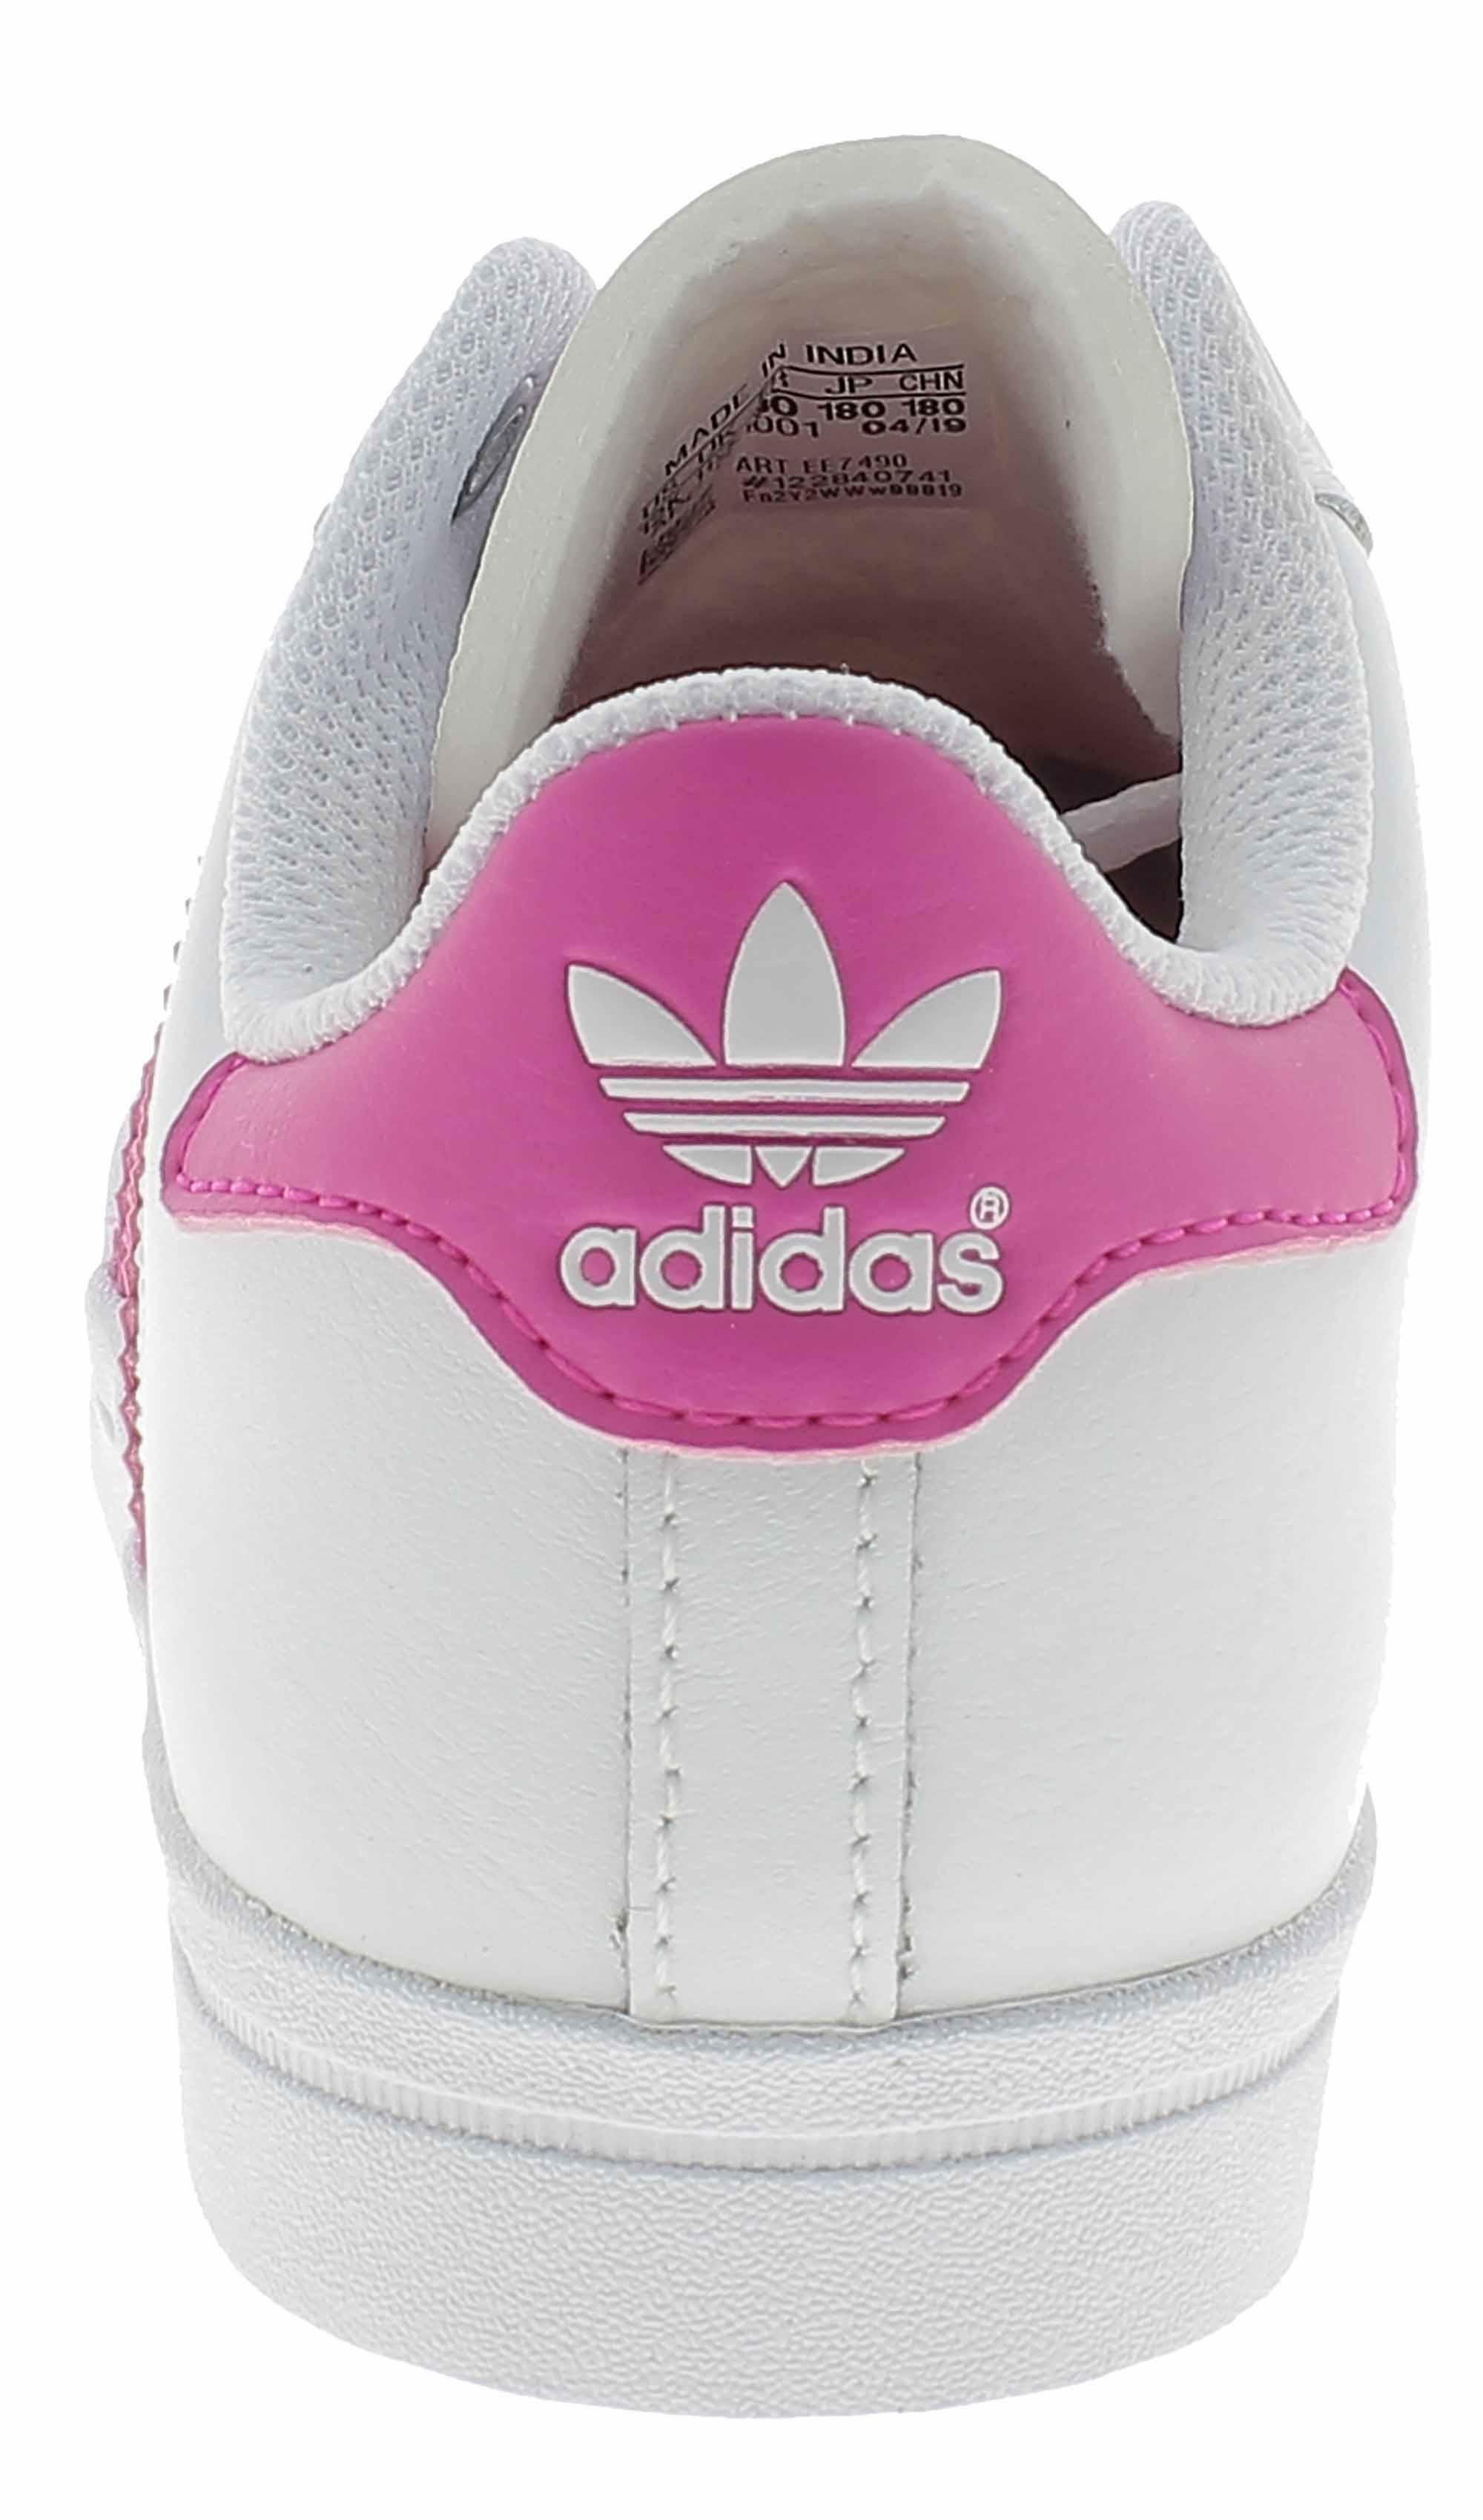 adidas adidas coast star c scarpe sportive bambina bianche ee7490